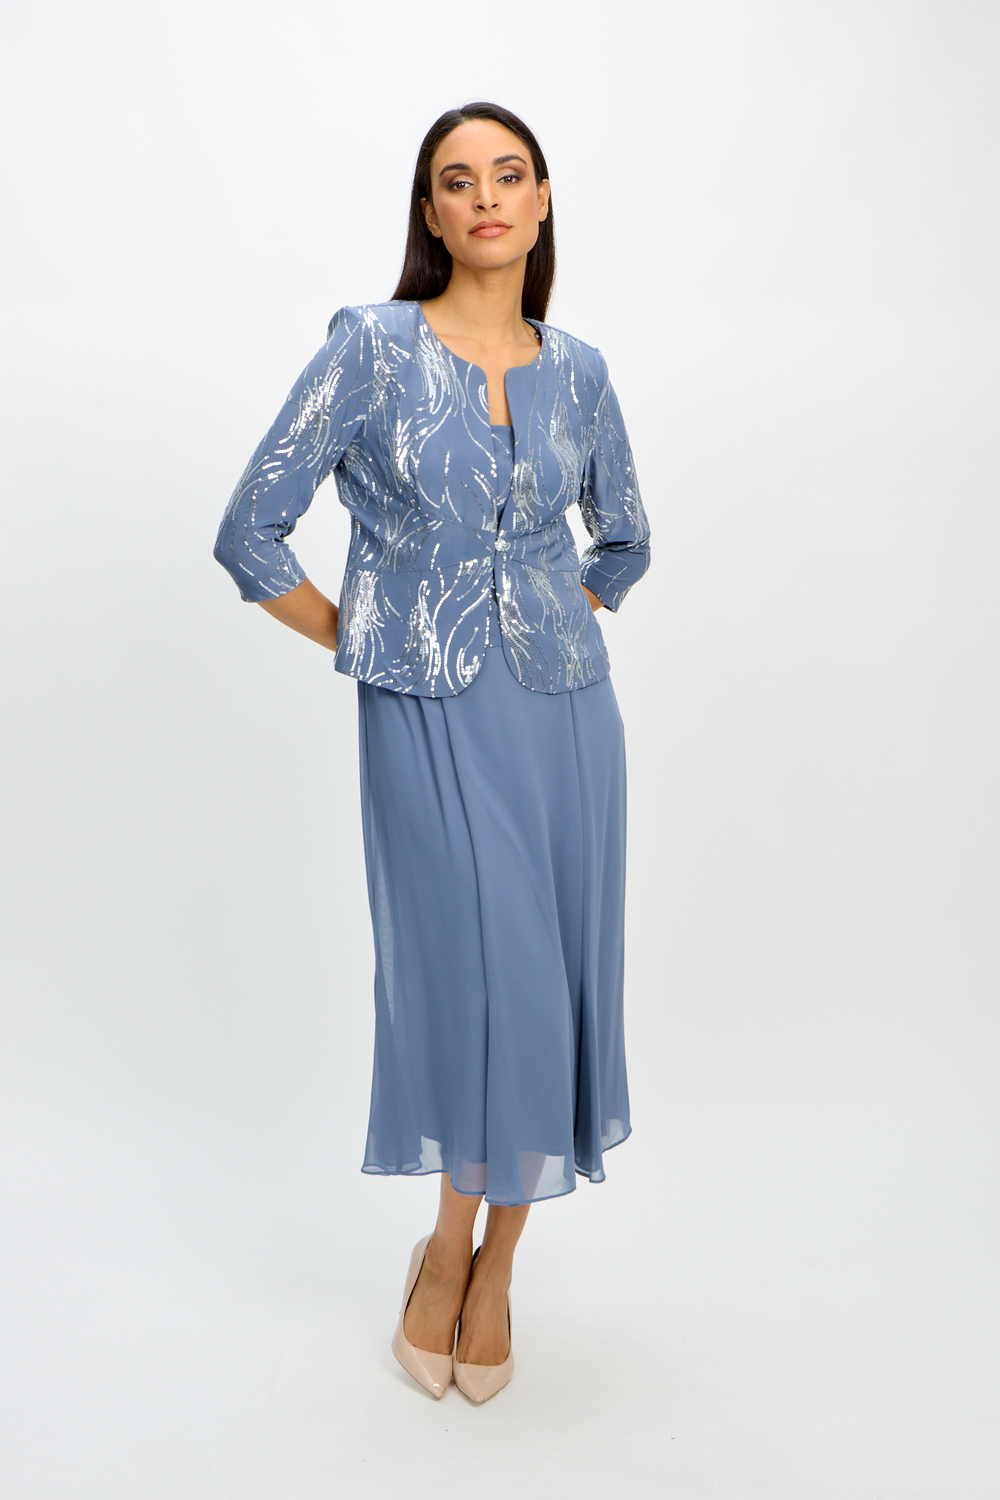 Tea Length Jacket Dress Style 1962675. Steel Blue